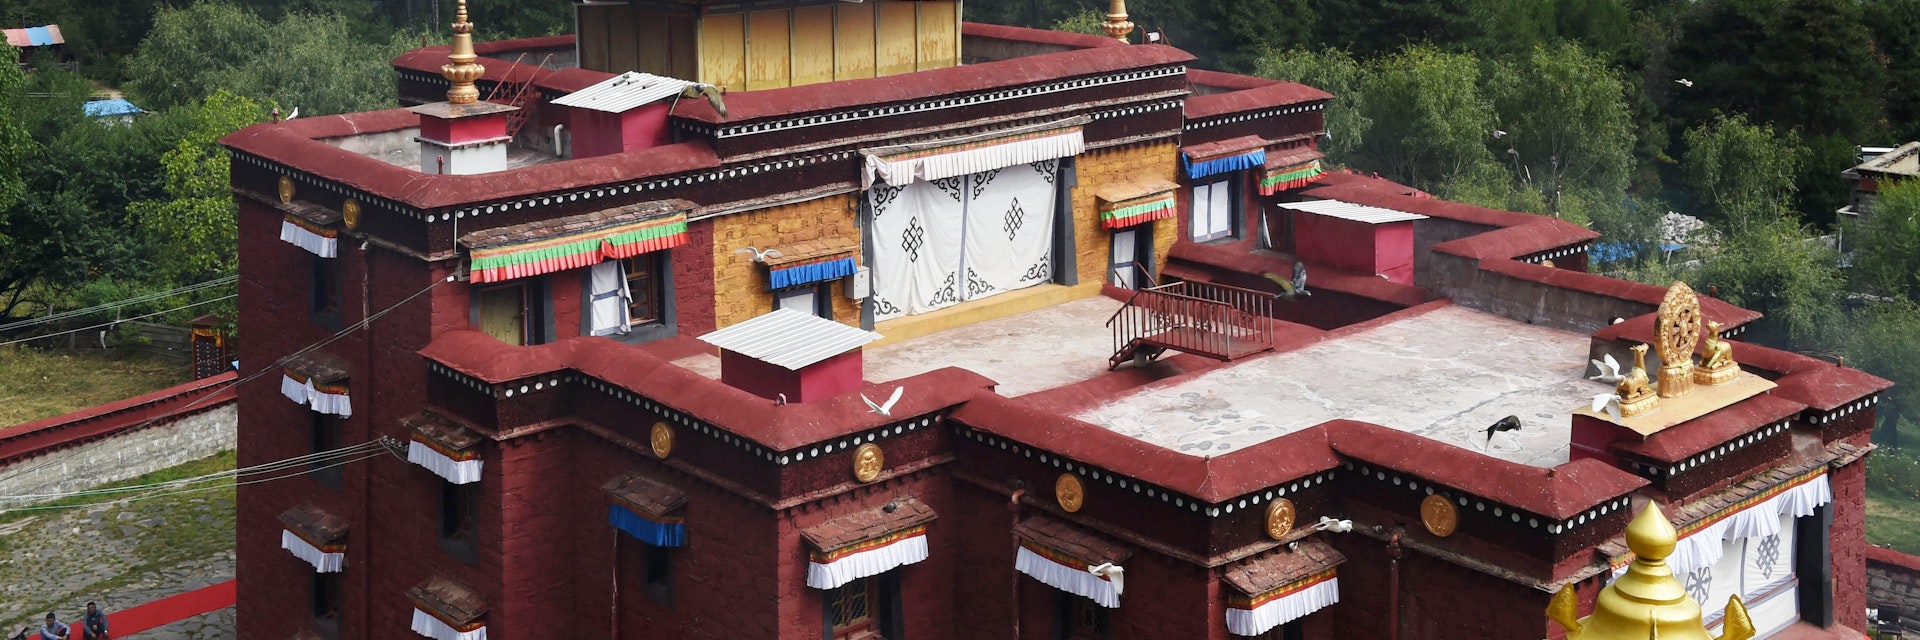 GKGG70 Nyingchi. 21st Aug, 2016. Photo taken on Aug. 21, 2016 shows the Lamaling Temple in Nyingchi City, southwest China's Tibet Autonomous Region. Credit:  Chogo/Xinhua/Alamy Live News